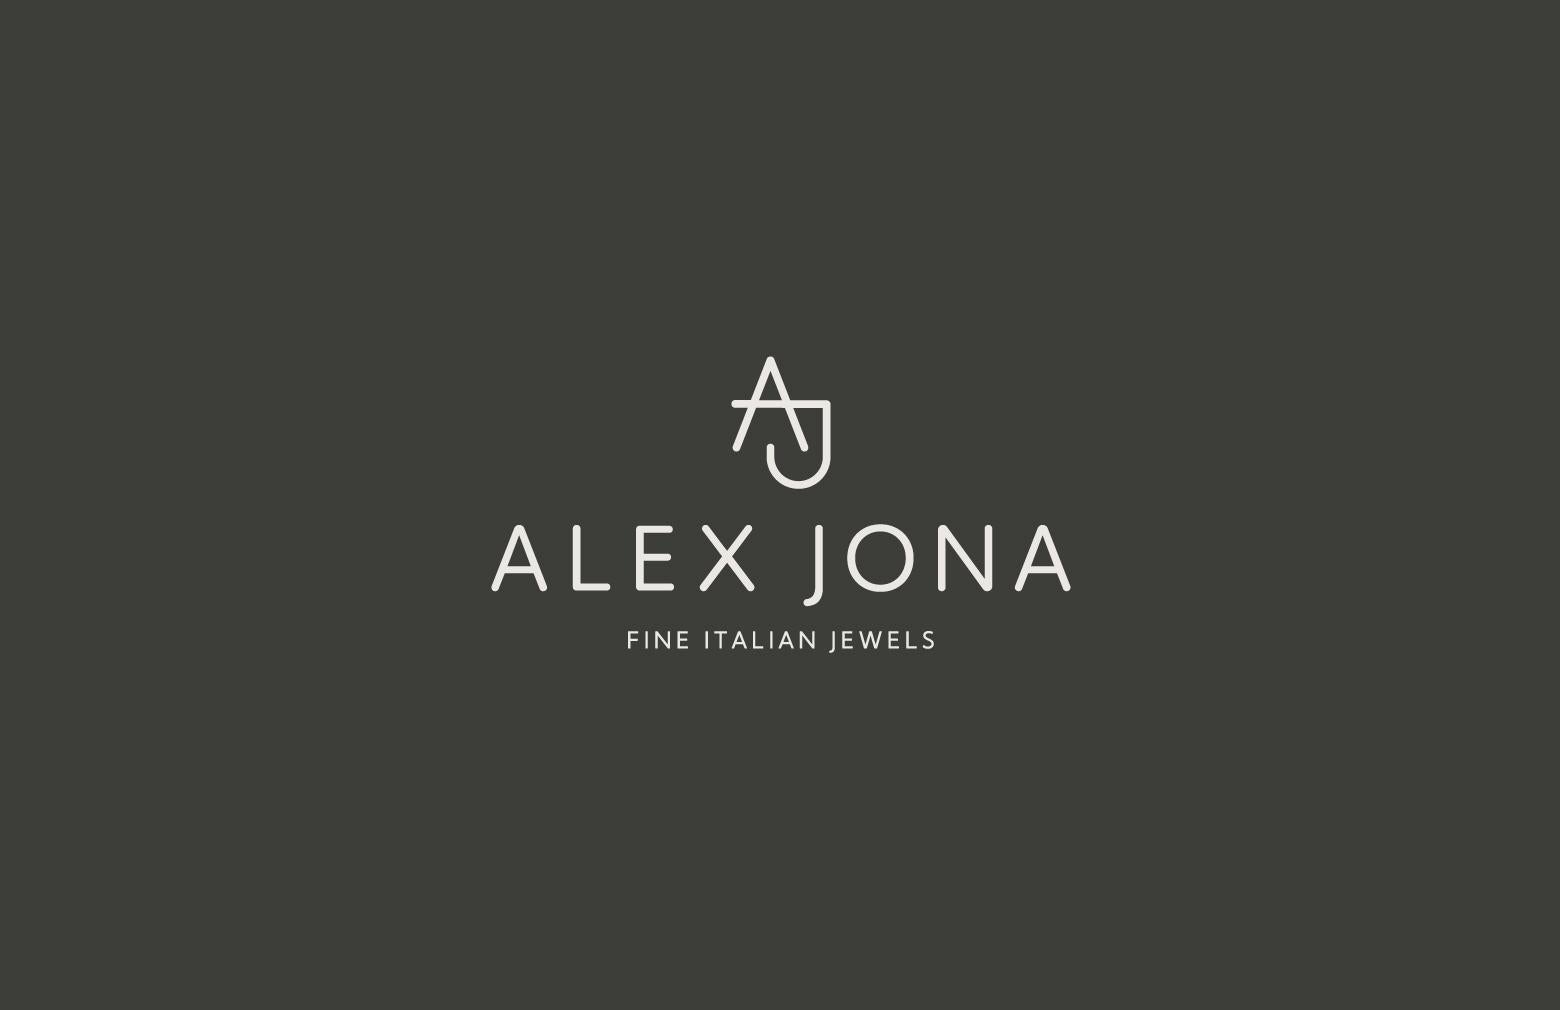 Alex Jona Black Diamond 18 Karat White Gold Hoop Earrings For Sale 5